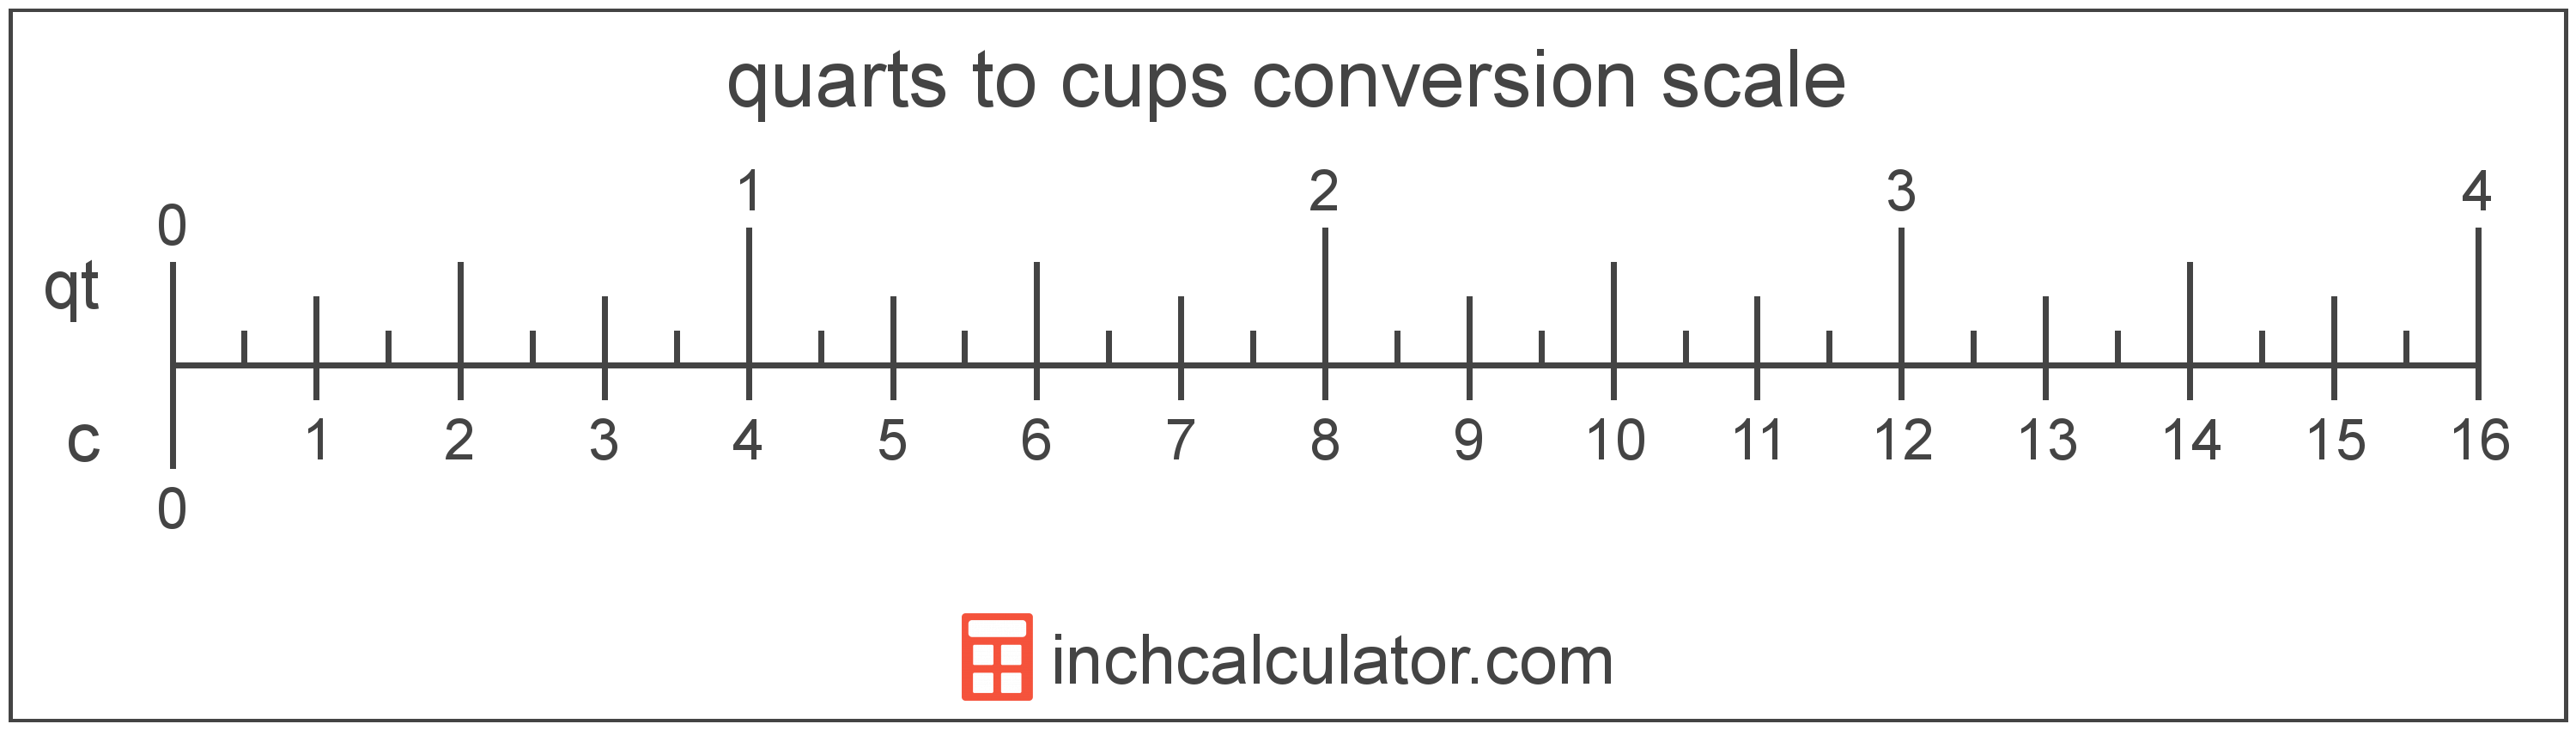 Cups Pints And Quarts Conversion Chart